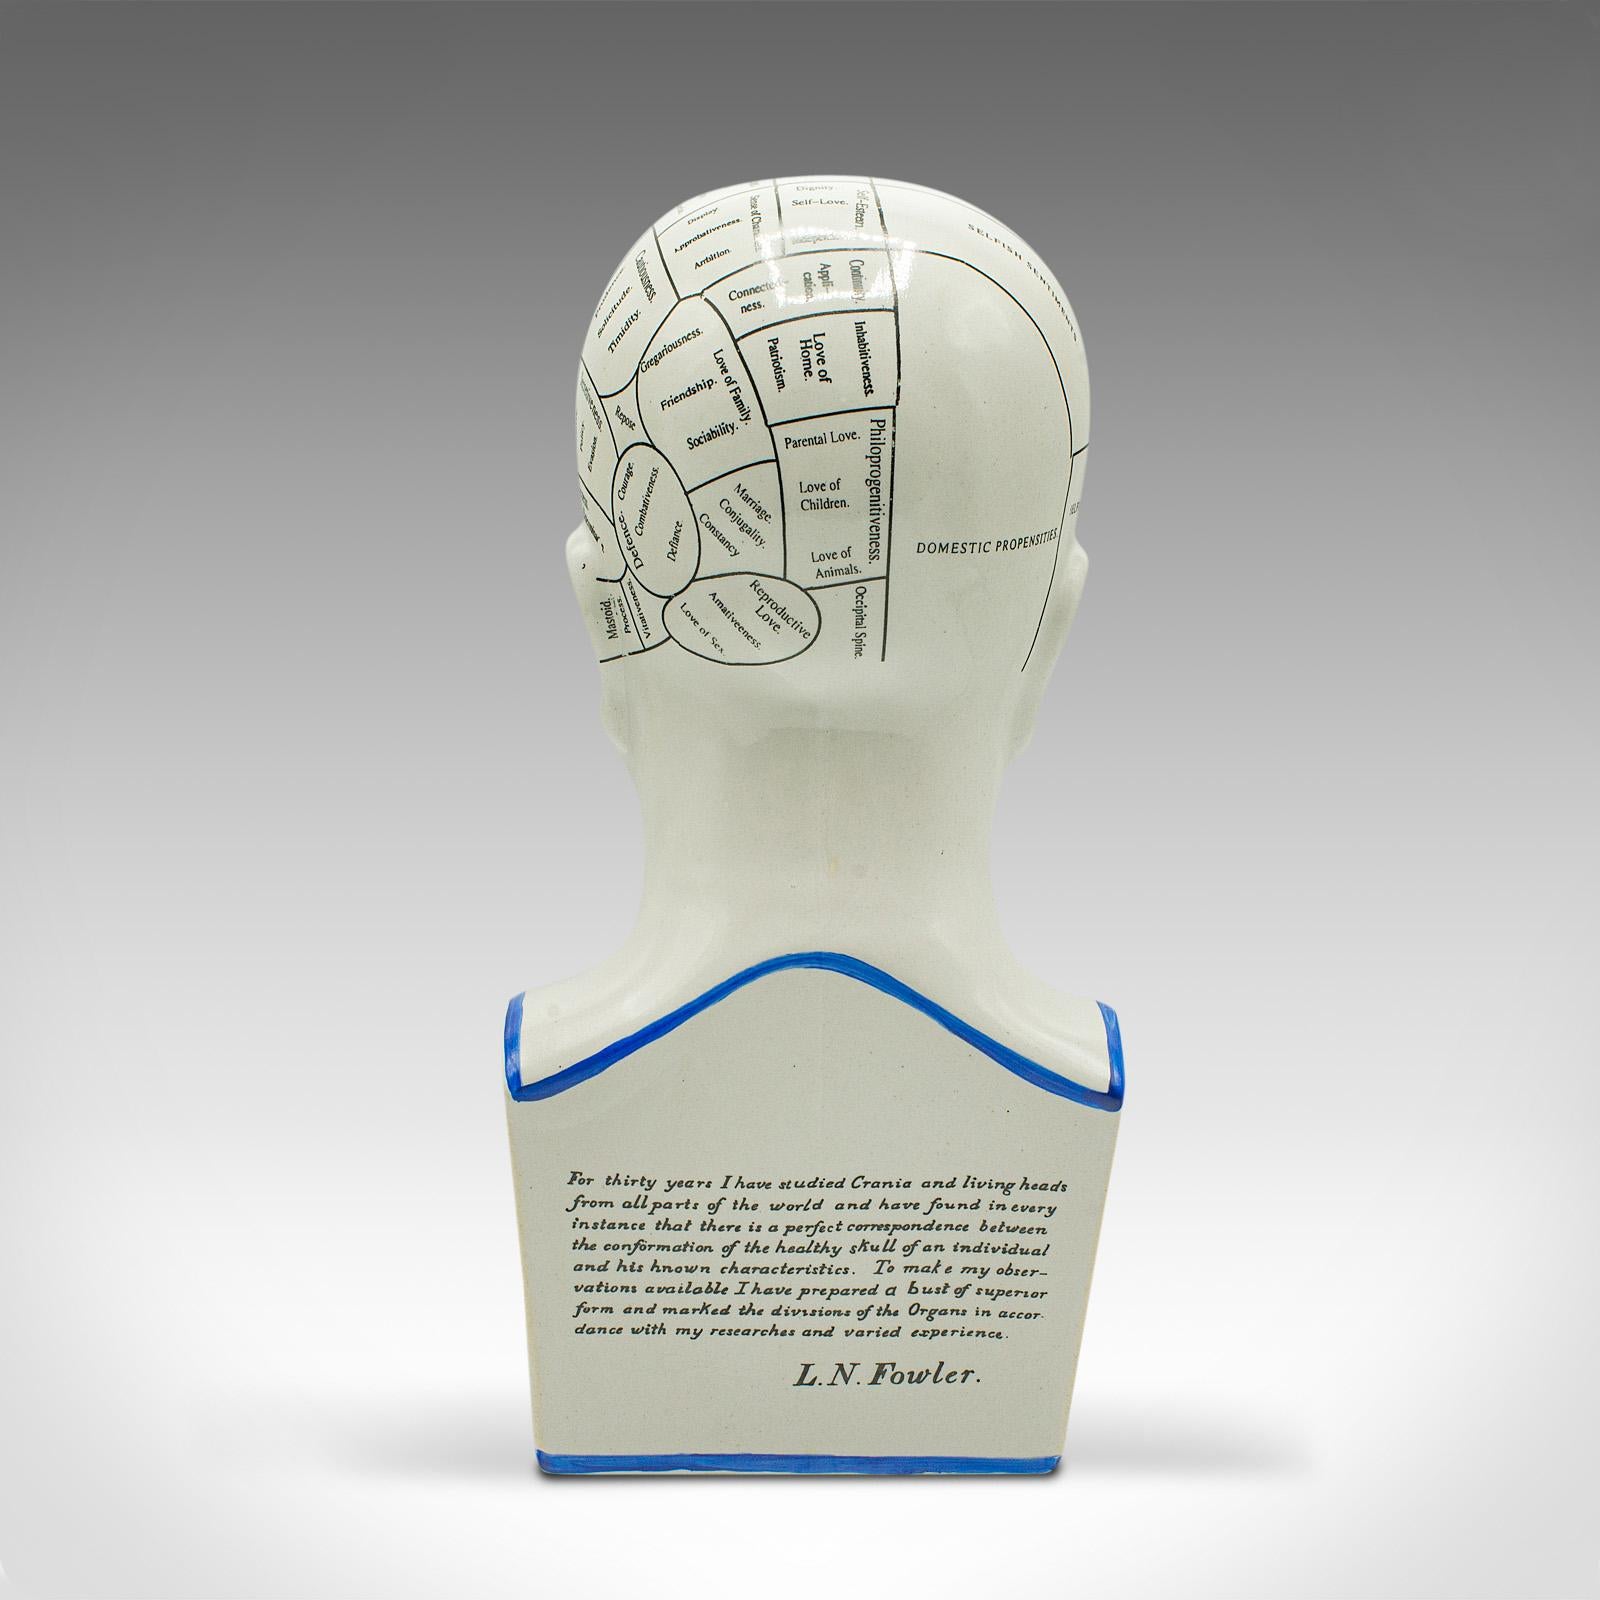 British Vintage Phrenology Head, English, Ceramic, Decorative Bust, Medical, Display